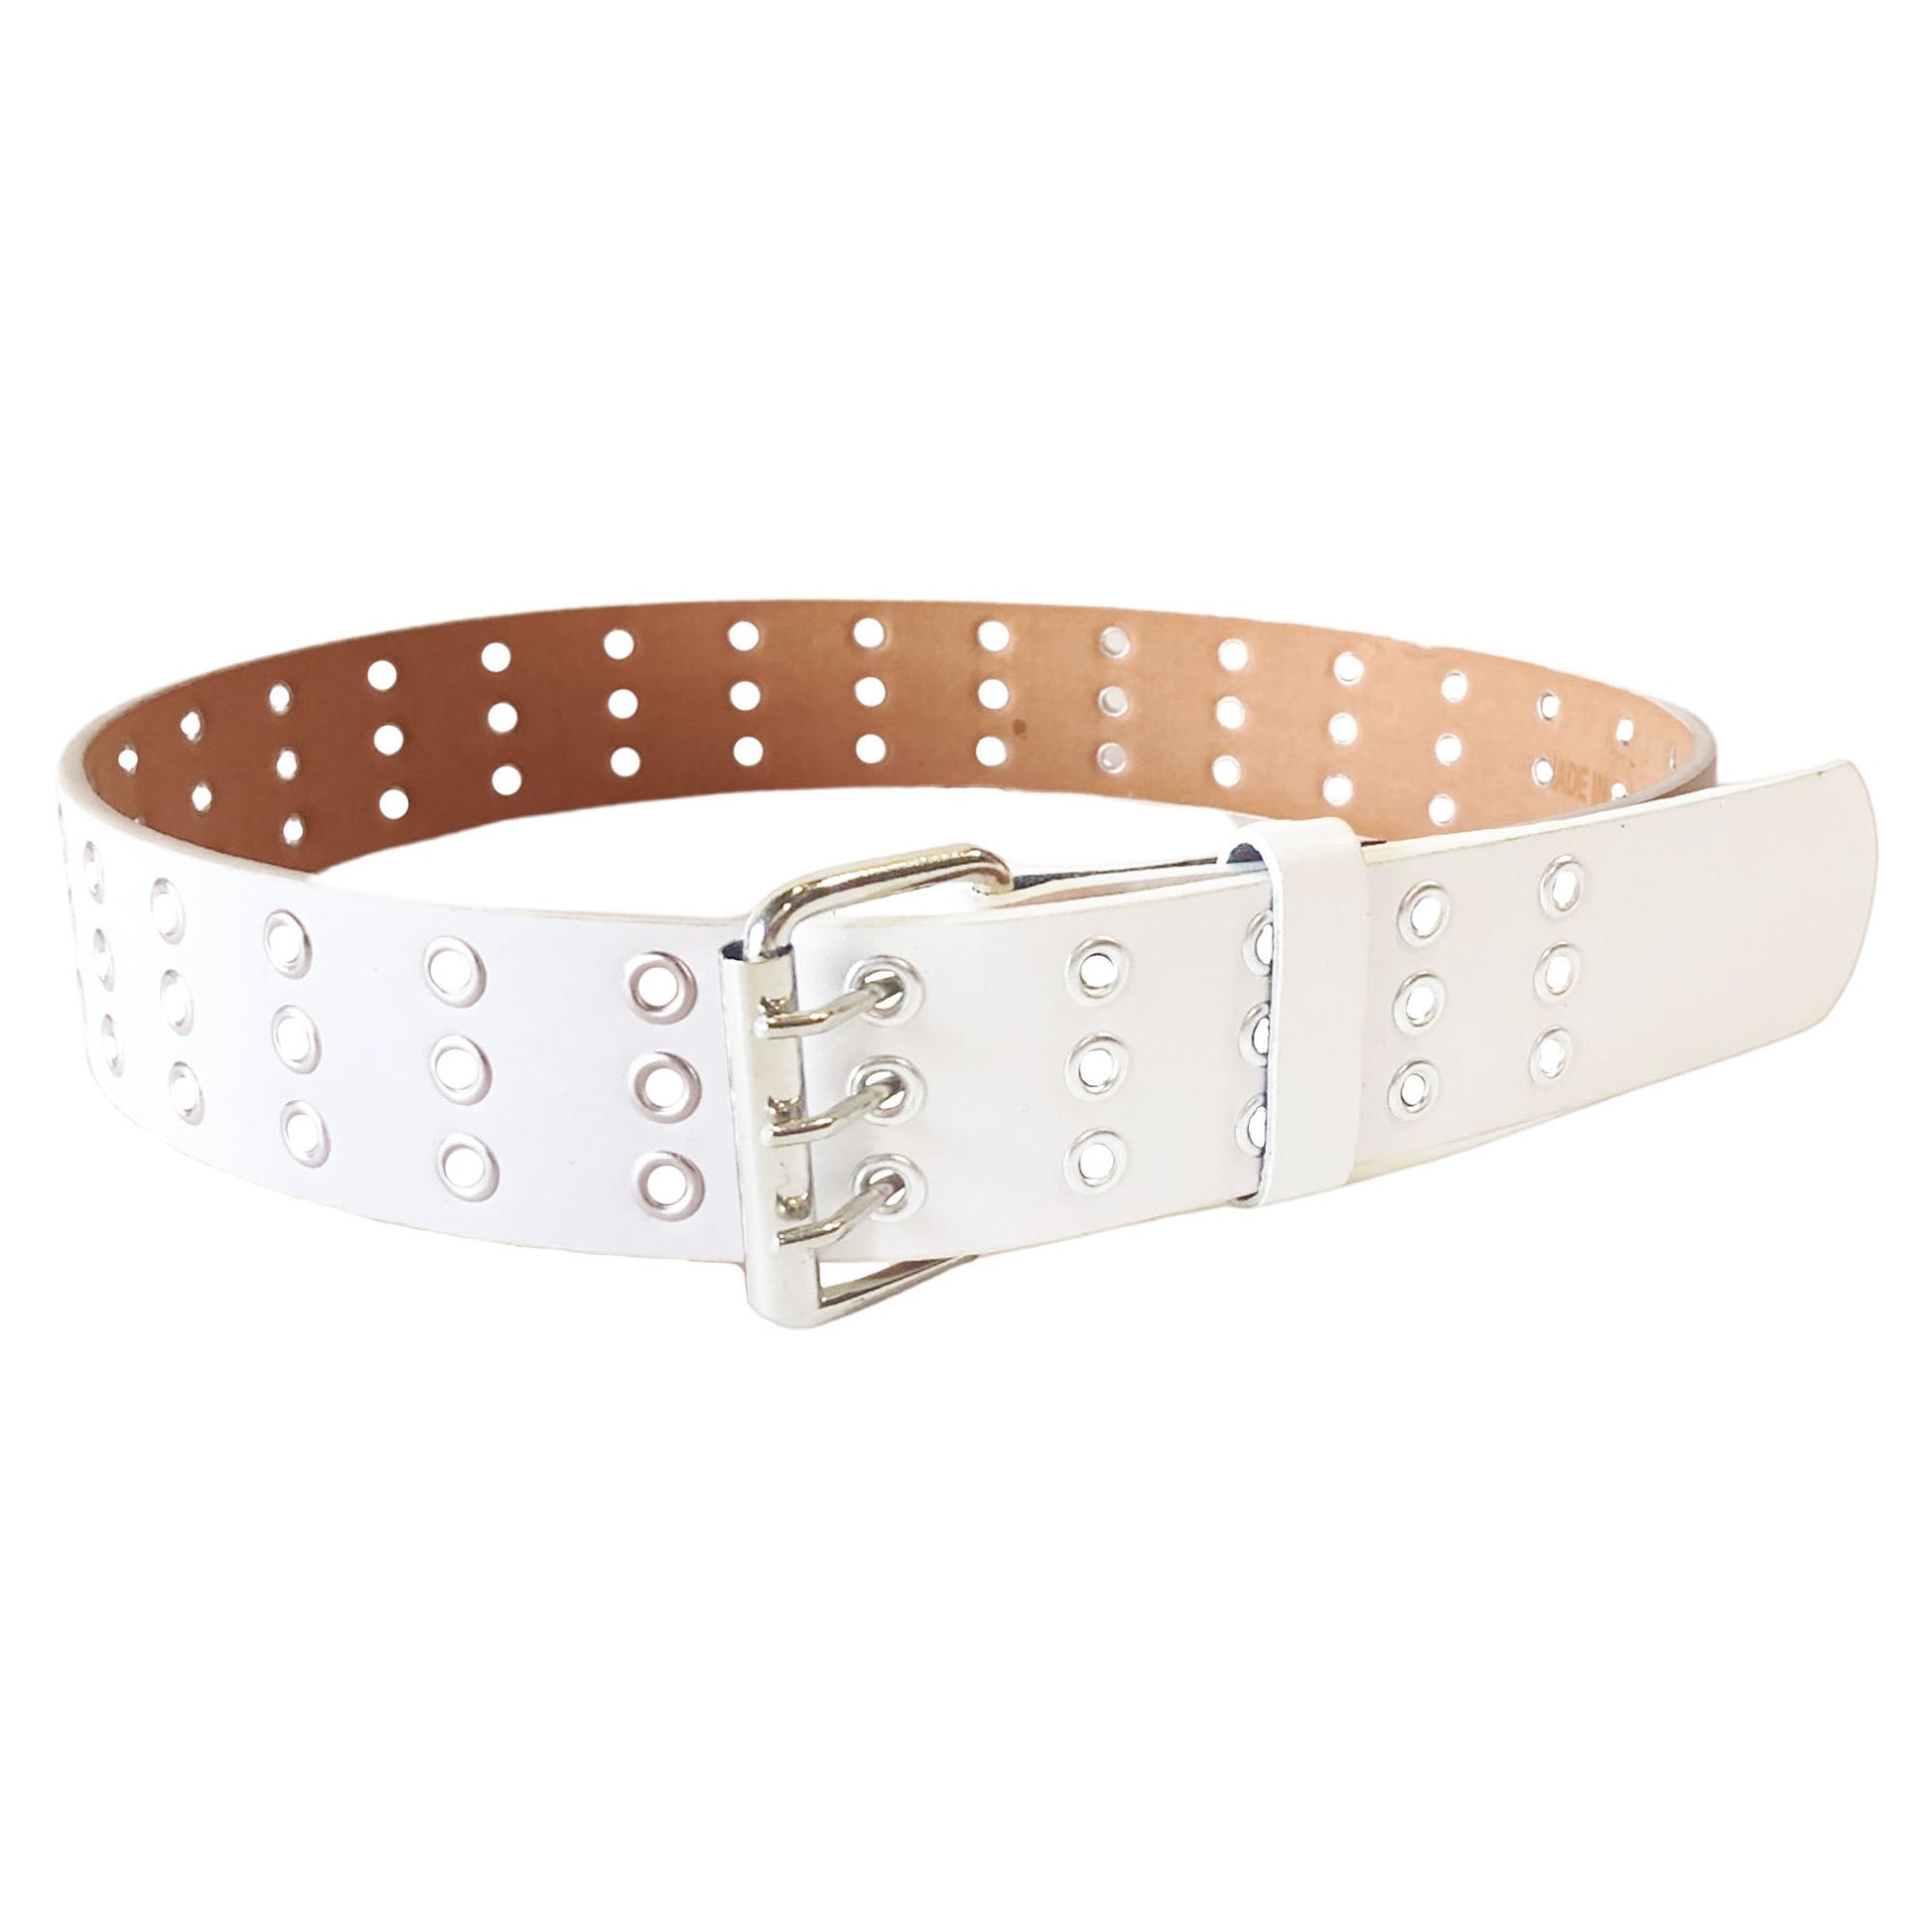 Men's wholesale 3 hole leather grommet belt in white